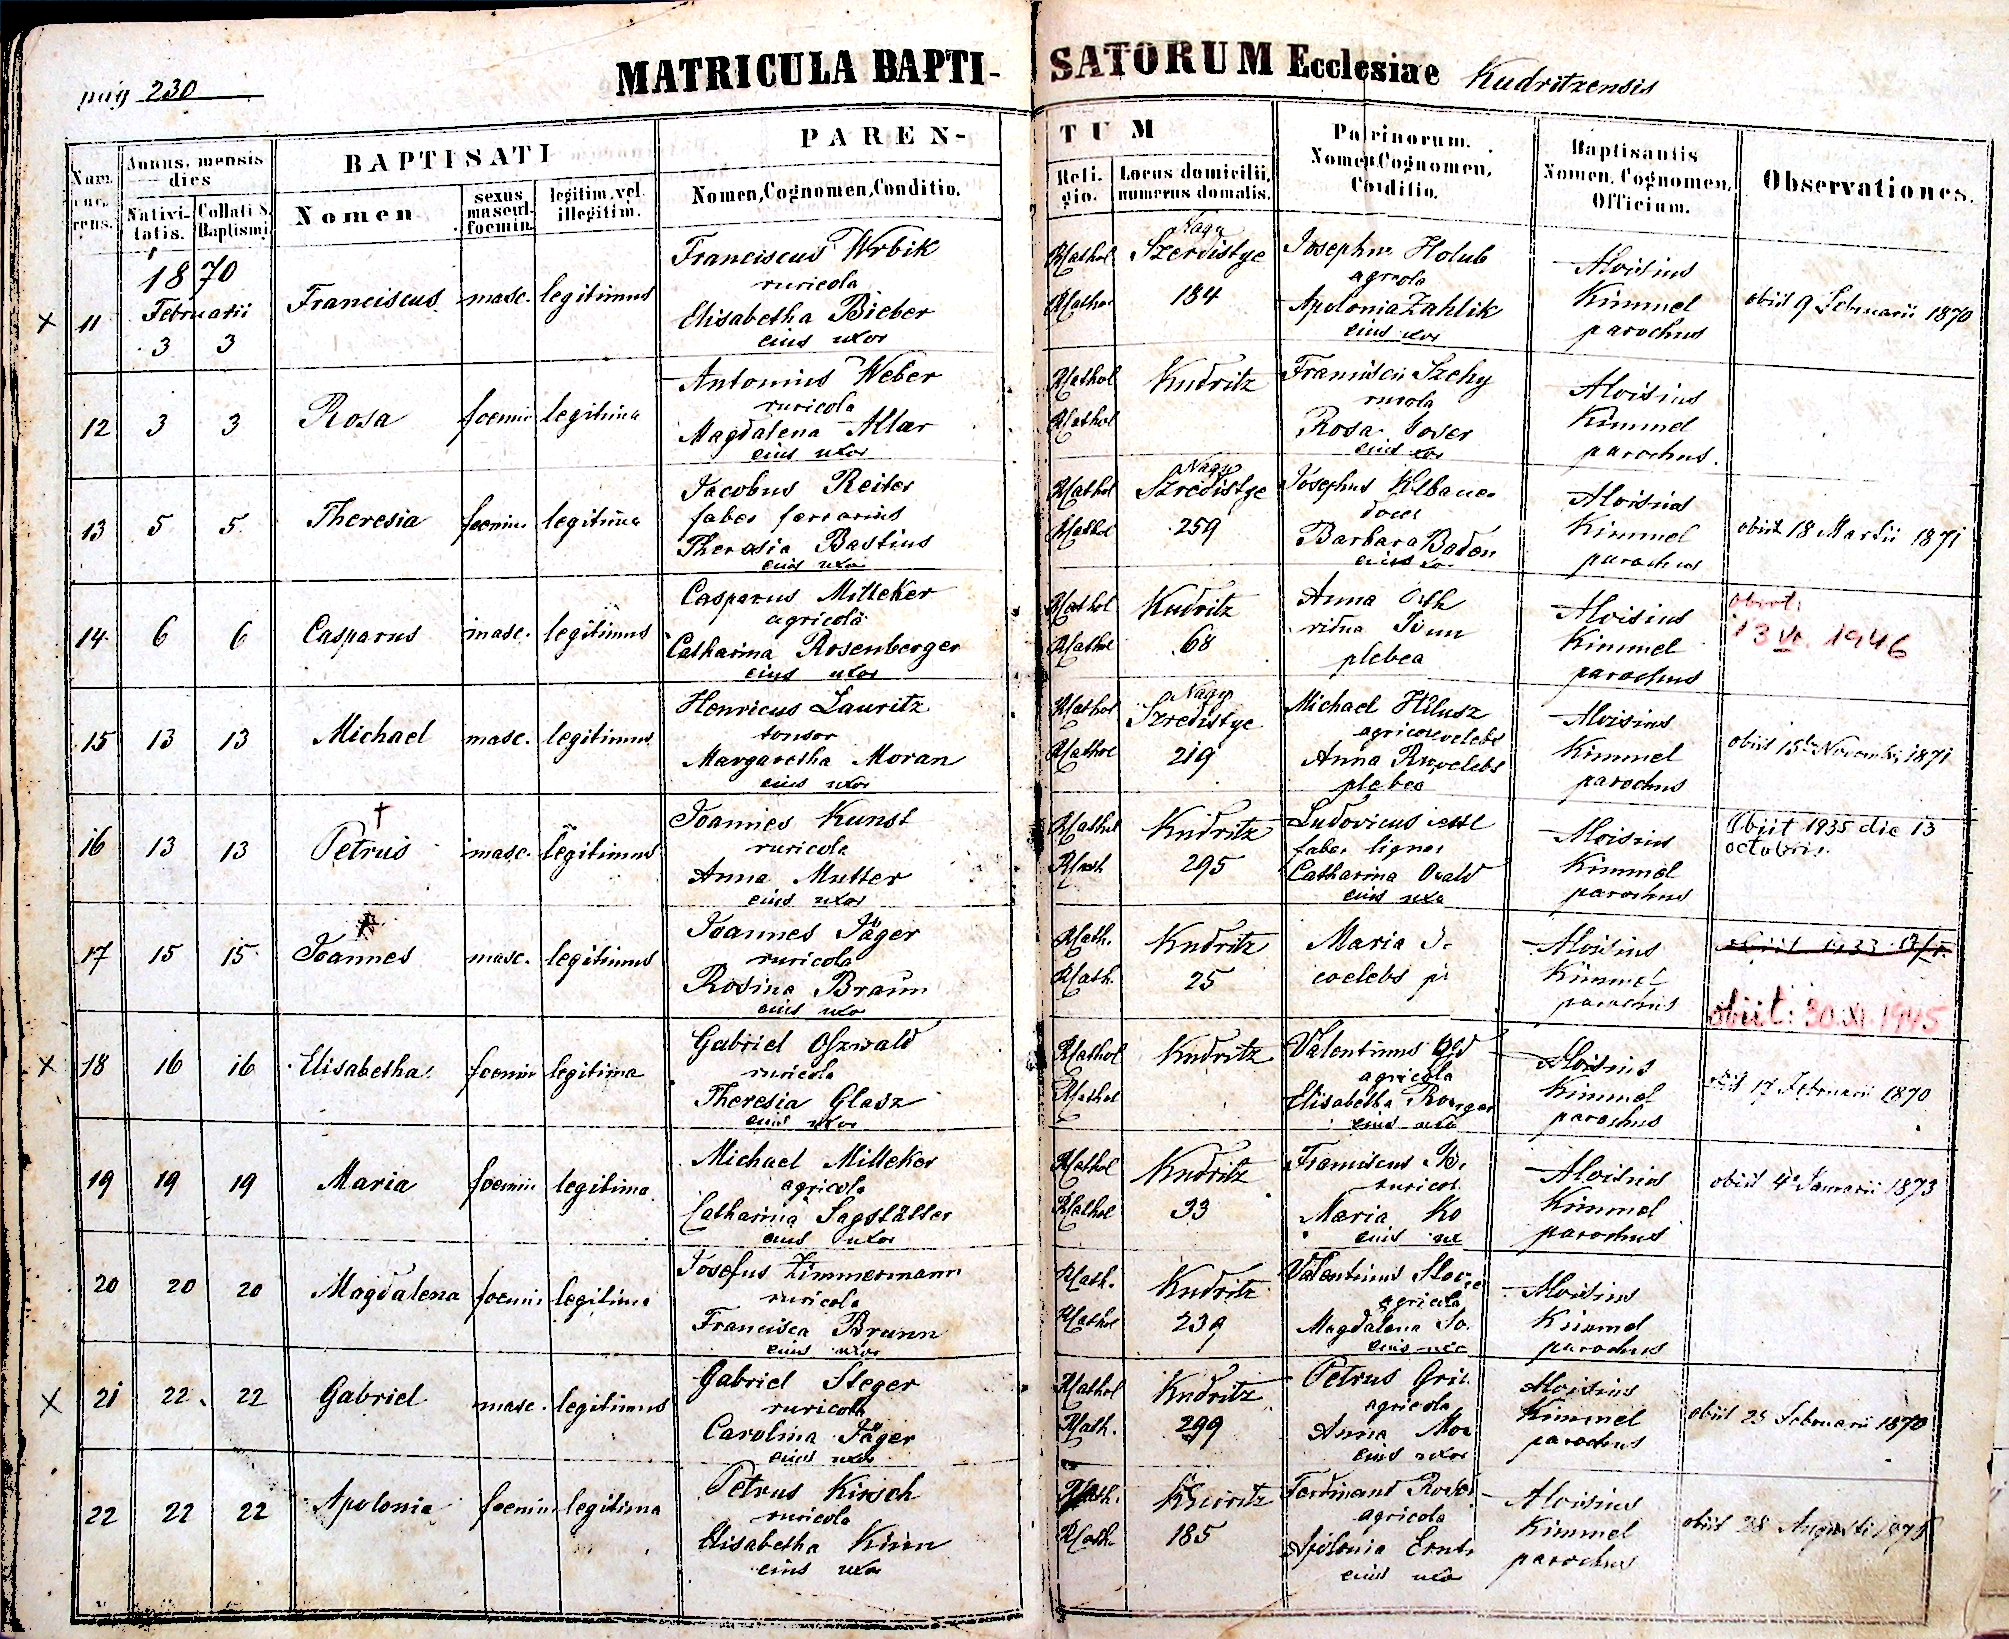 images/church_records/BIRTHS/1852-1870B/230